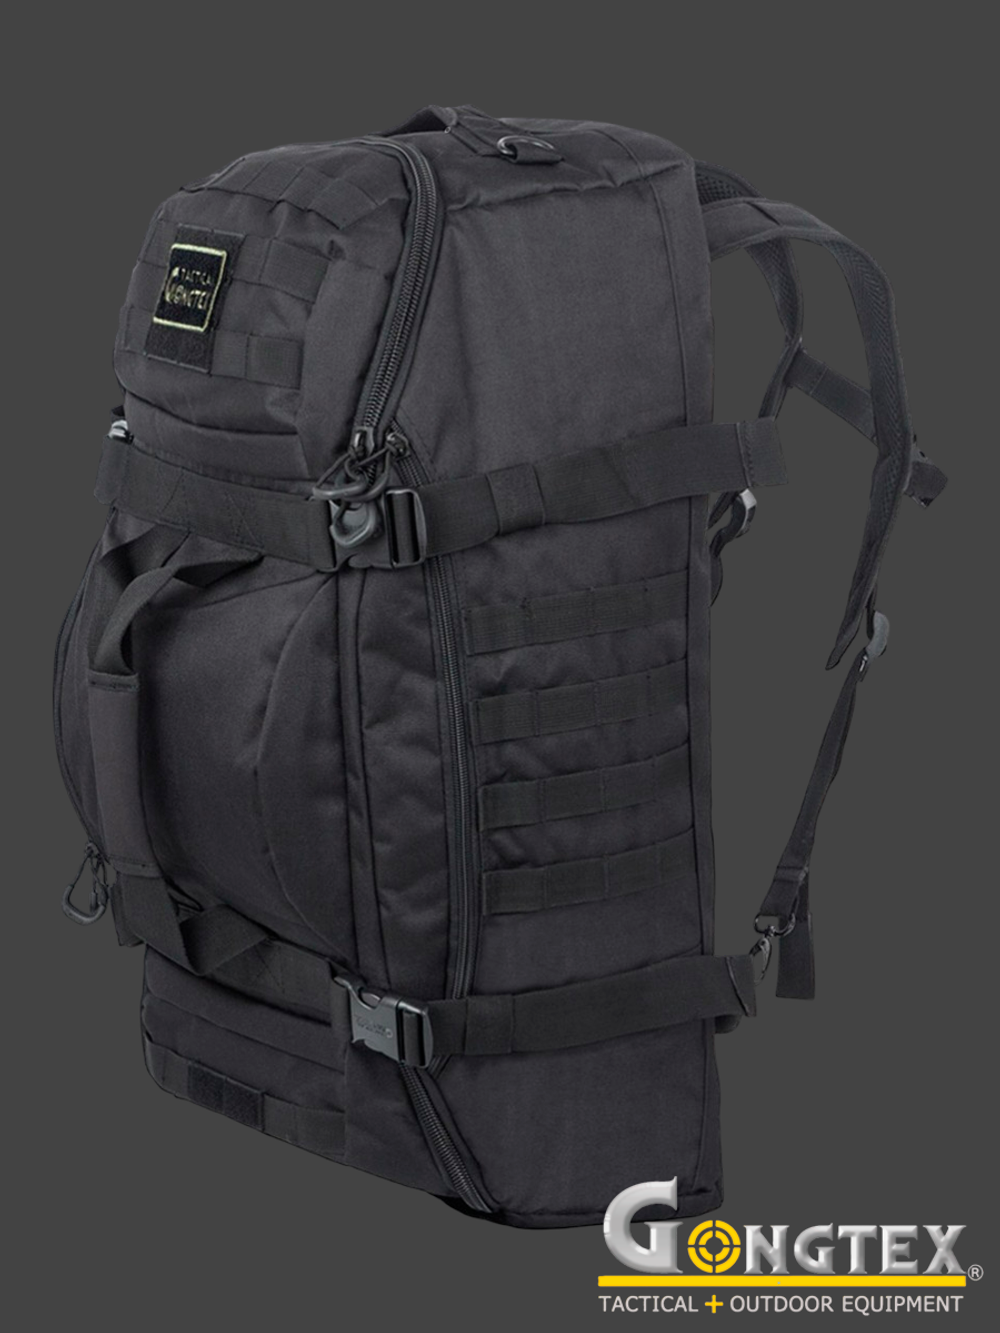 Баул Gongtex Traveller Duffle Backpack, 55 л (0308). Чёрный